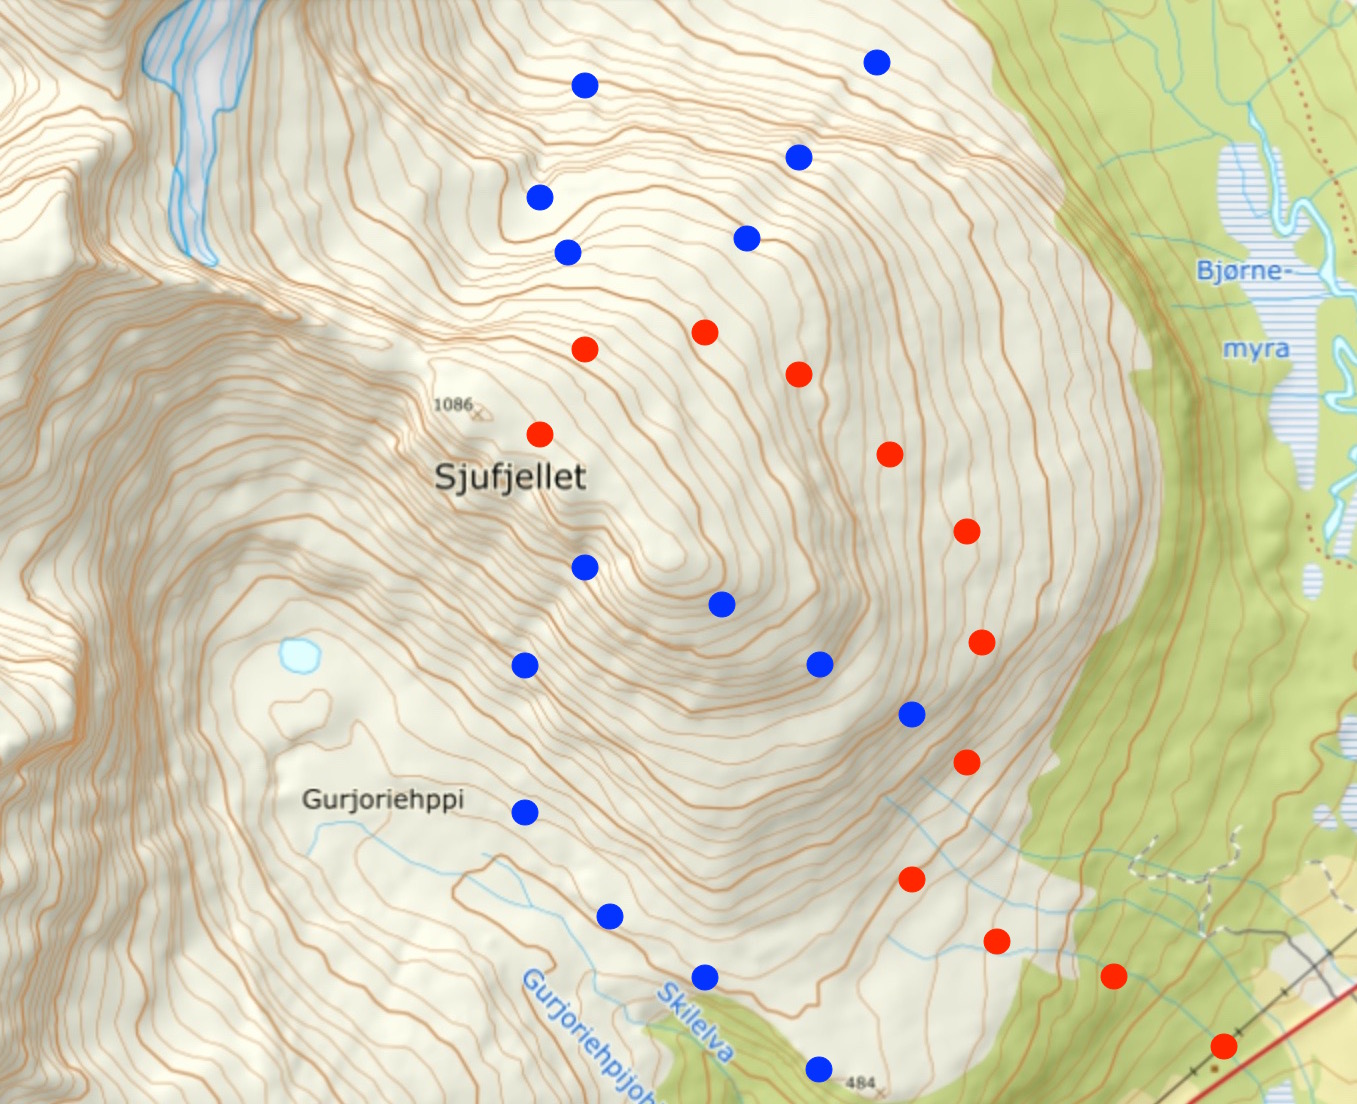 A topographical breakdown of potential ski tours on Sjufjellet in the Tamokdalen backcountry